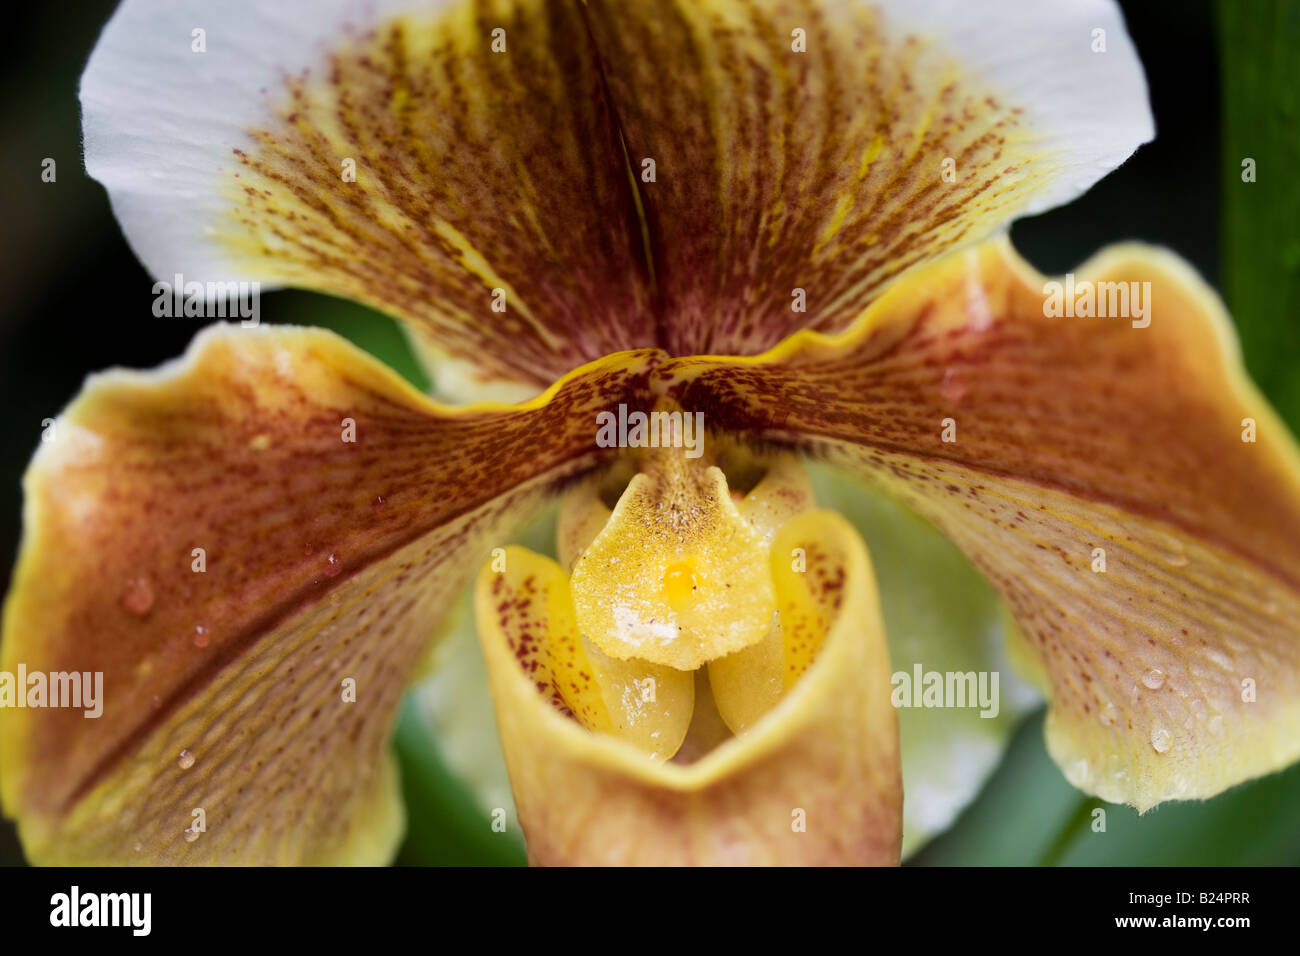 Paphiopedilum Hybrid Orchid Stock Photo